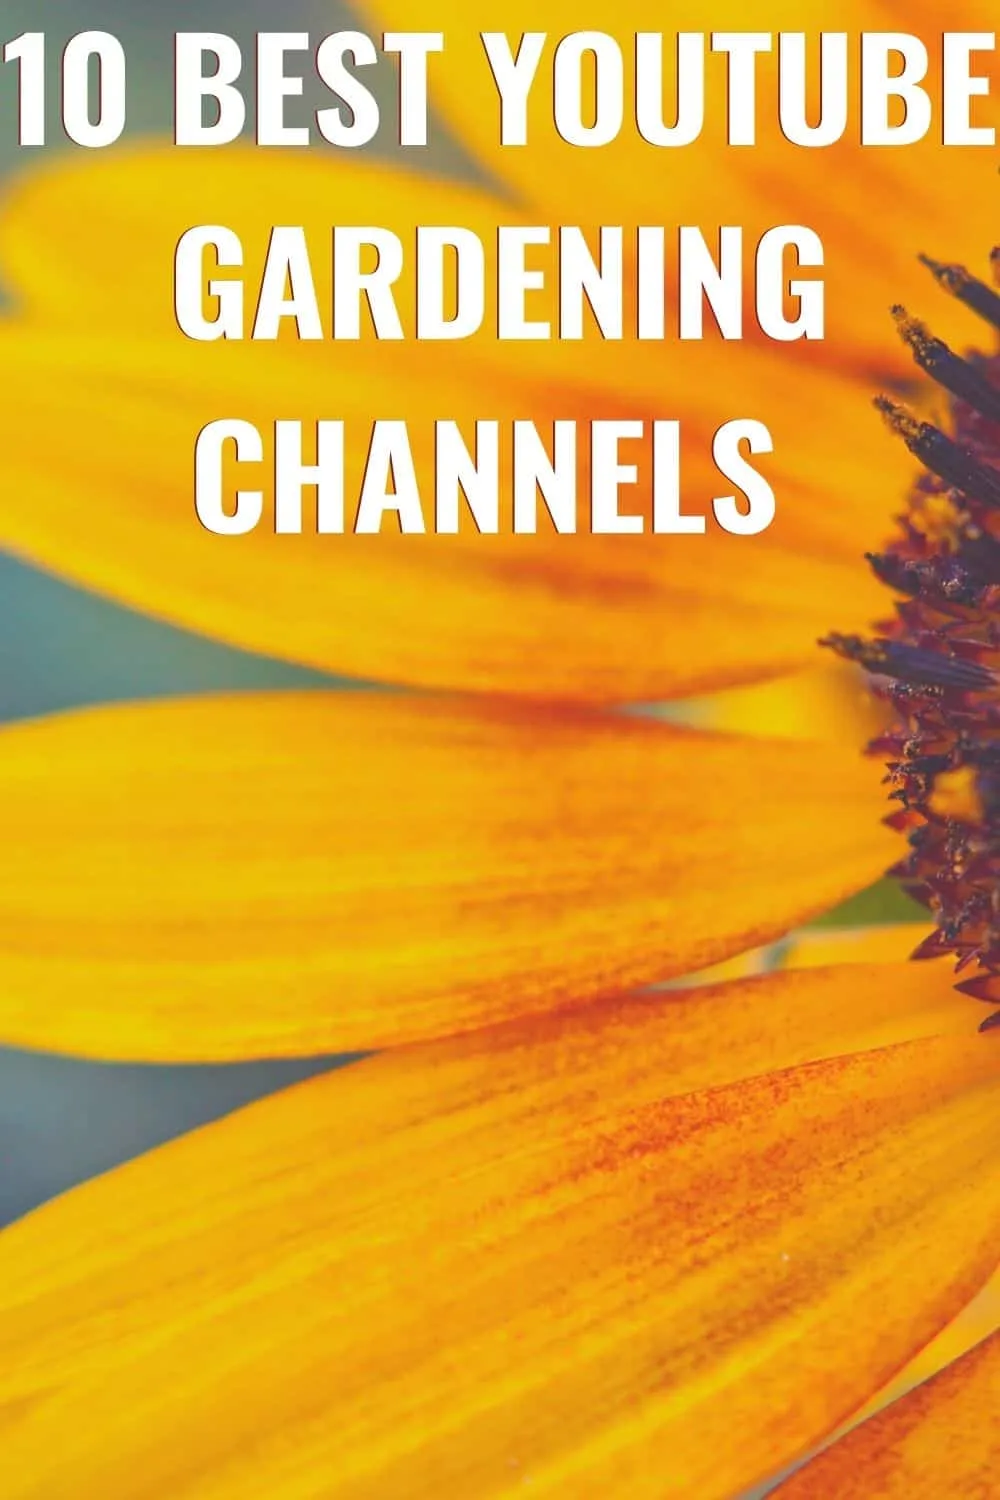 Best YouTube gardening channels